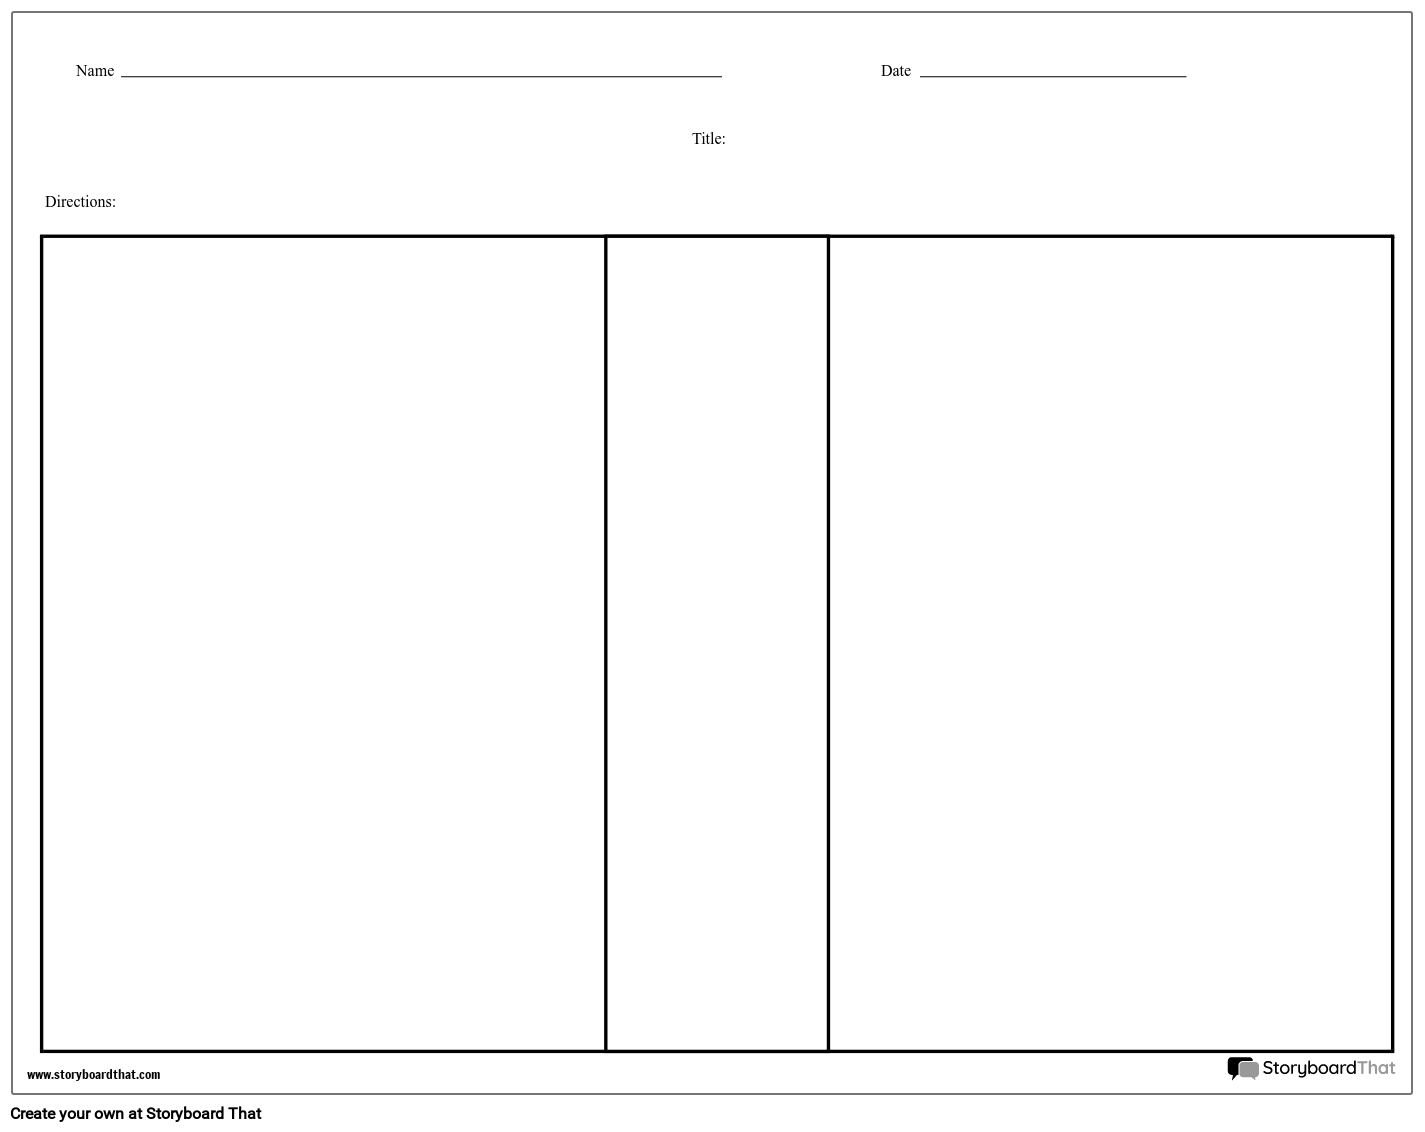 Jacket Blank Storyboard by worksheet templates